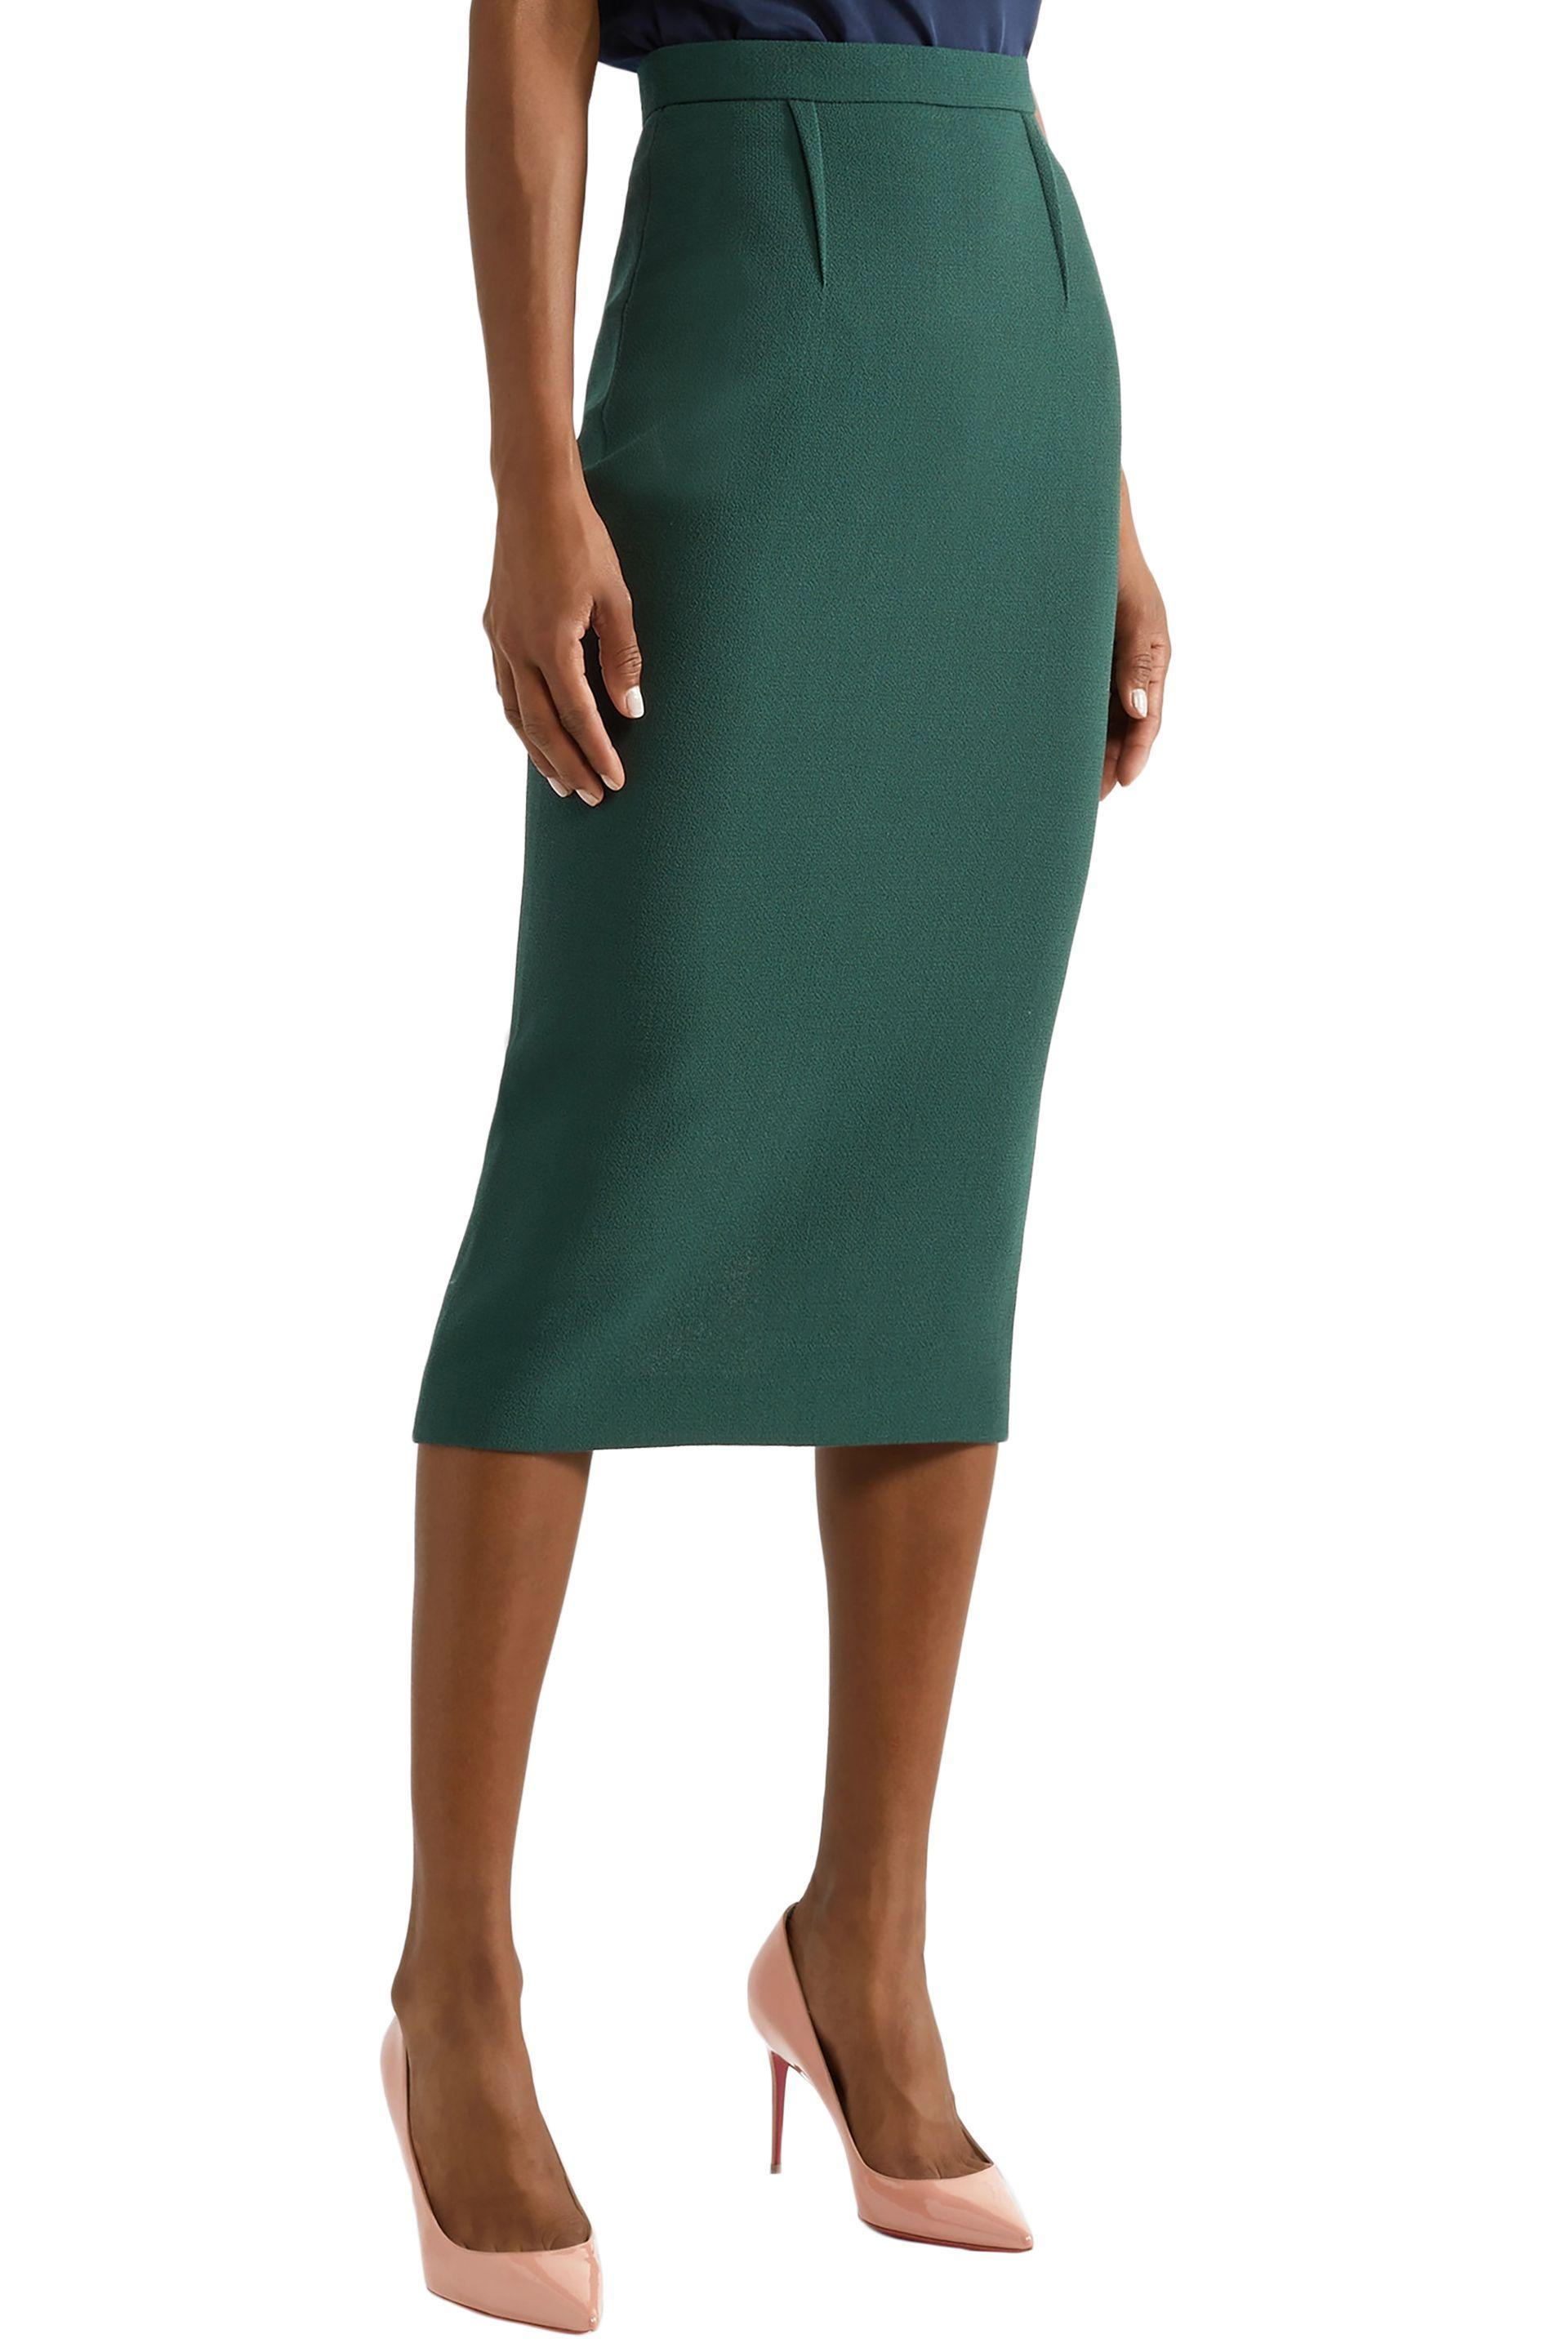 Roland Mouret Arreton Wool-crepe Pencil Skirt in Emerald (Green) - Lyst